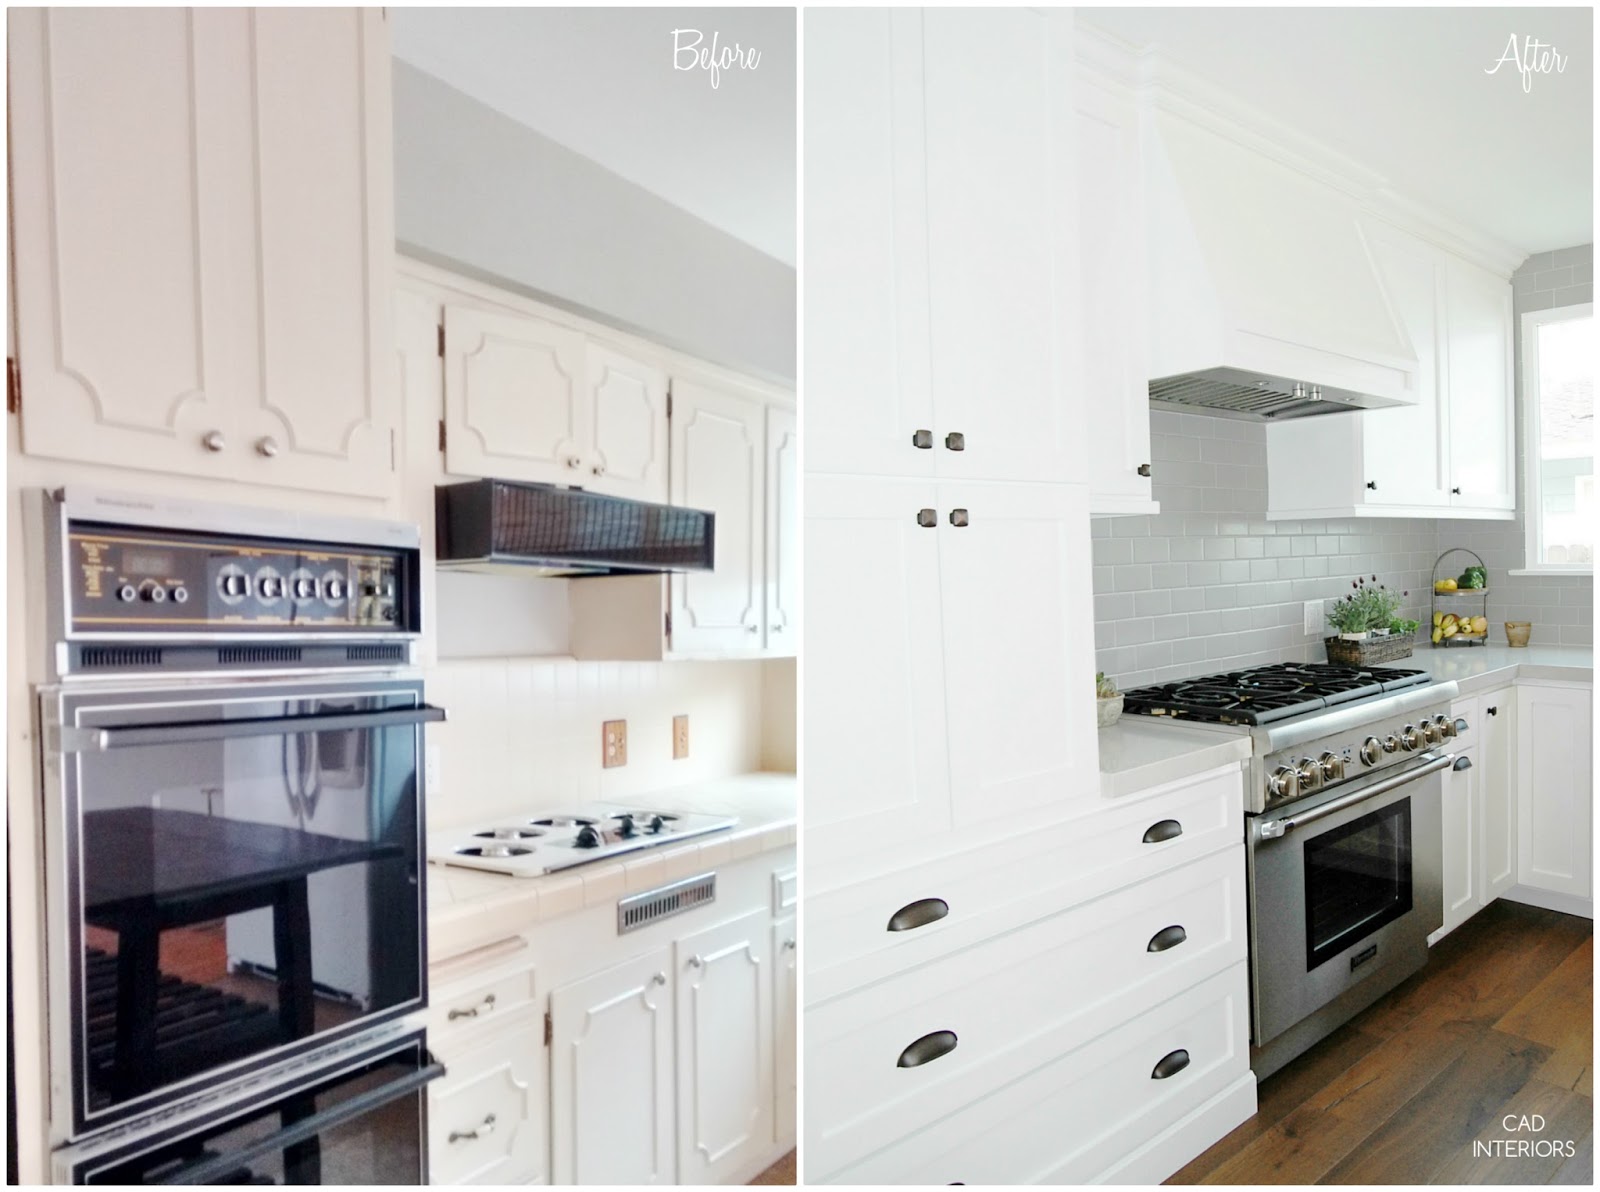 CAD INTERIORS kitchen renovation remodel home improvement modern classic transitional white black kitchen